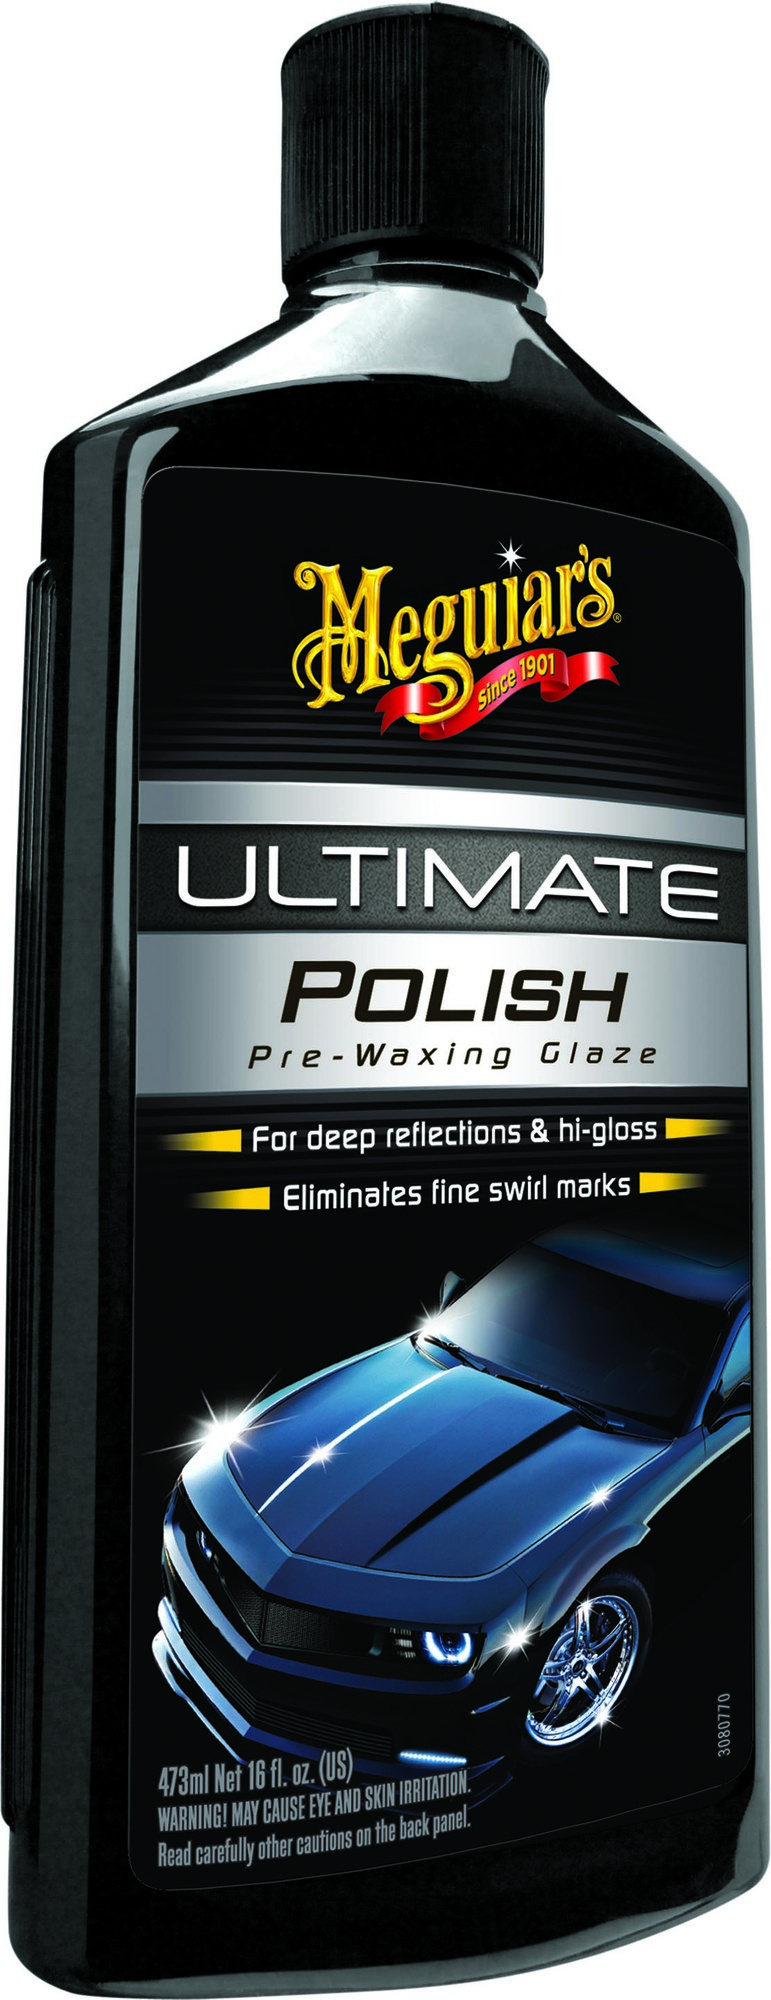 pulimento brillo ultimate polish meguiars el mejor polish.